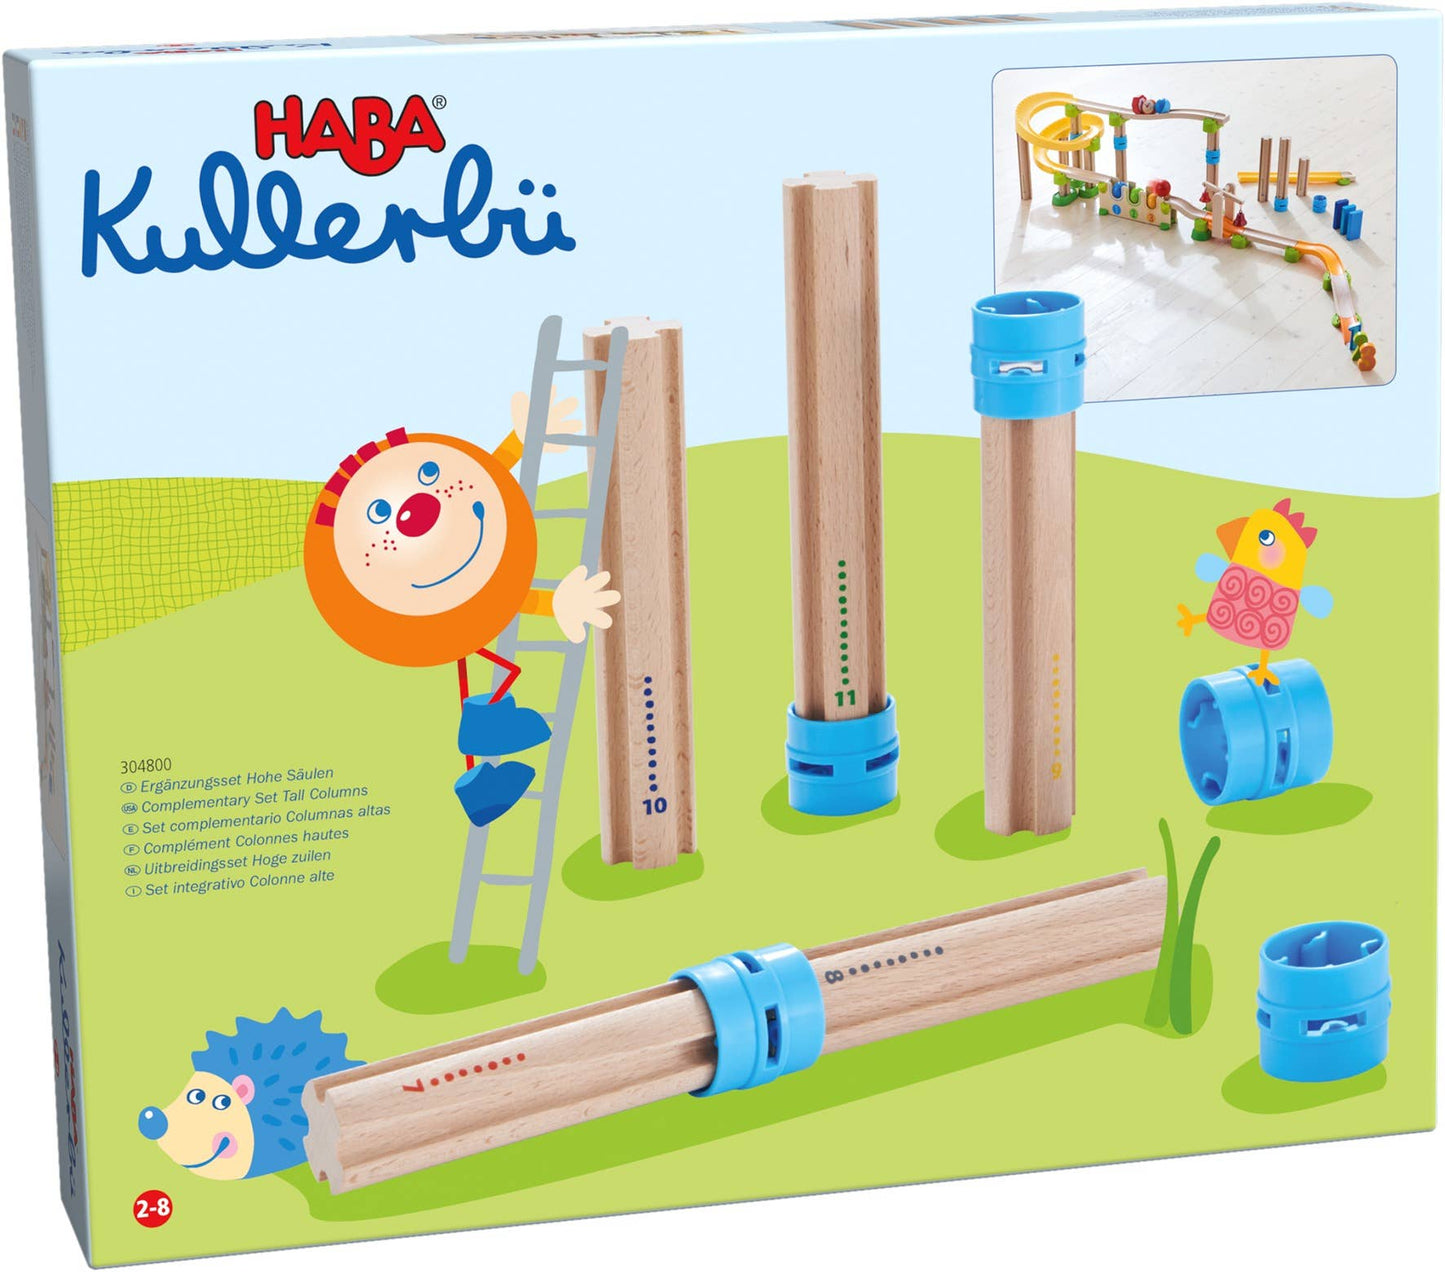 HABA USA - Kullerbu Complementary Set Tall Columns